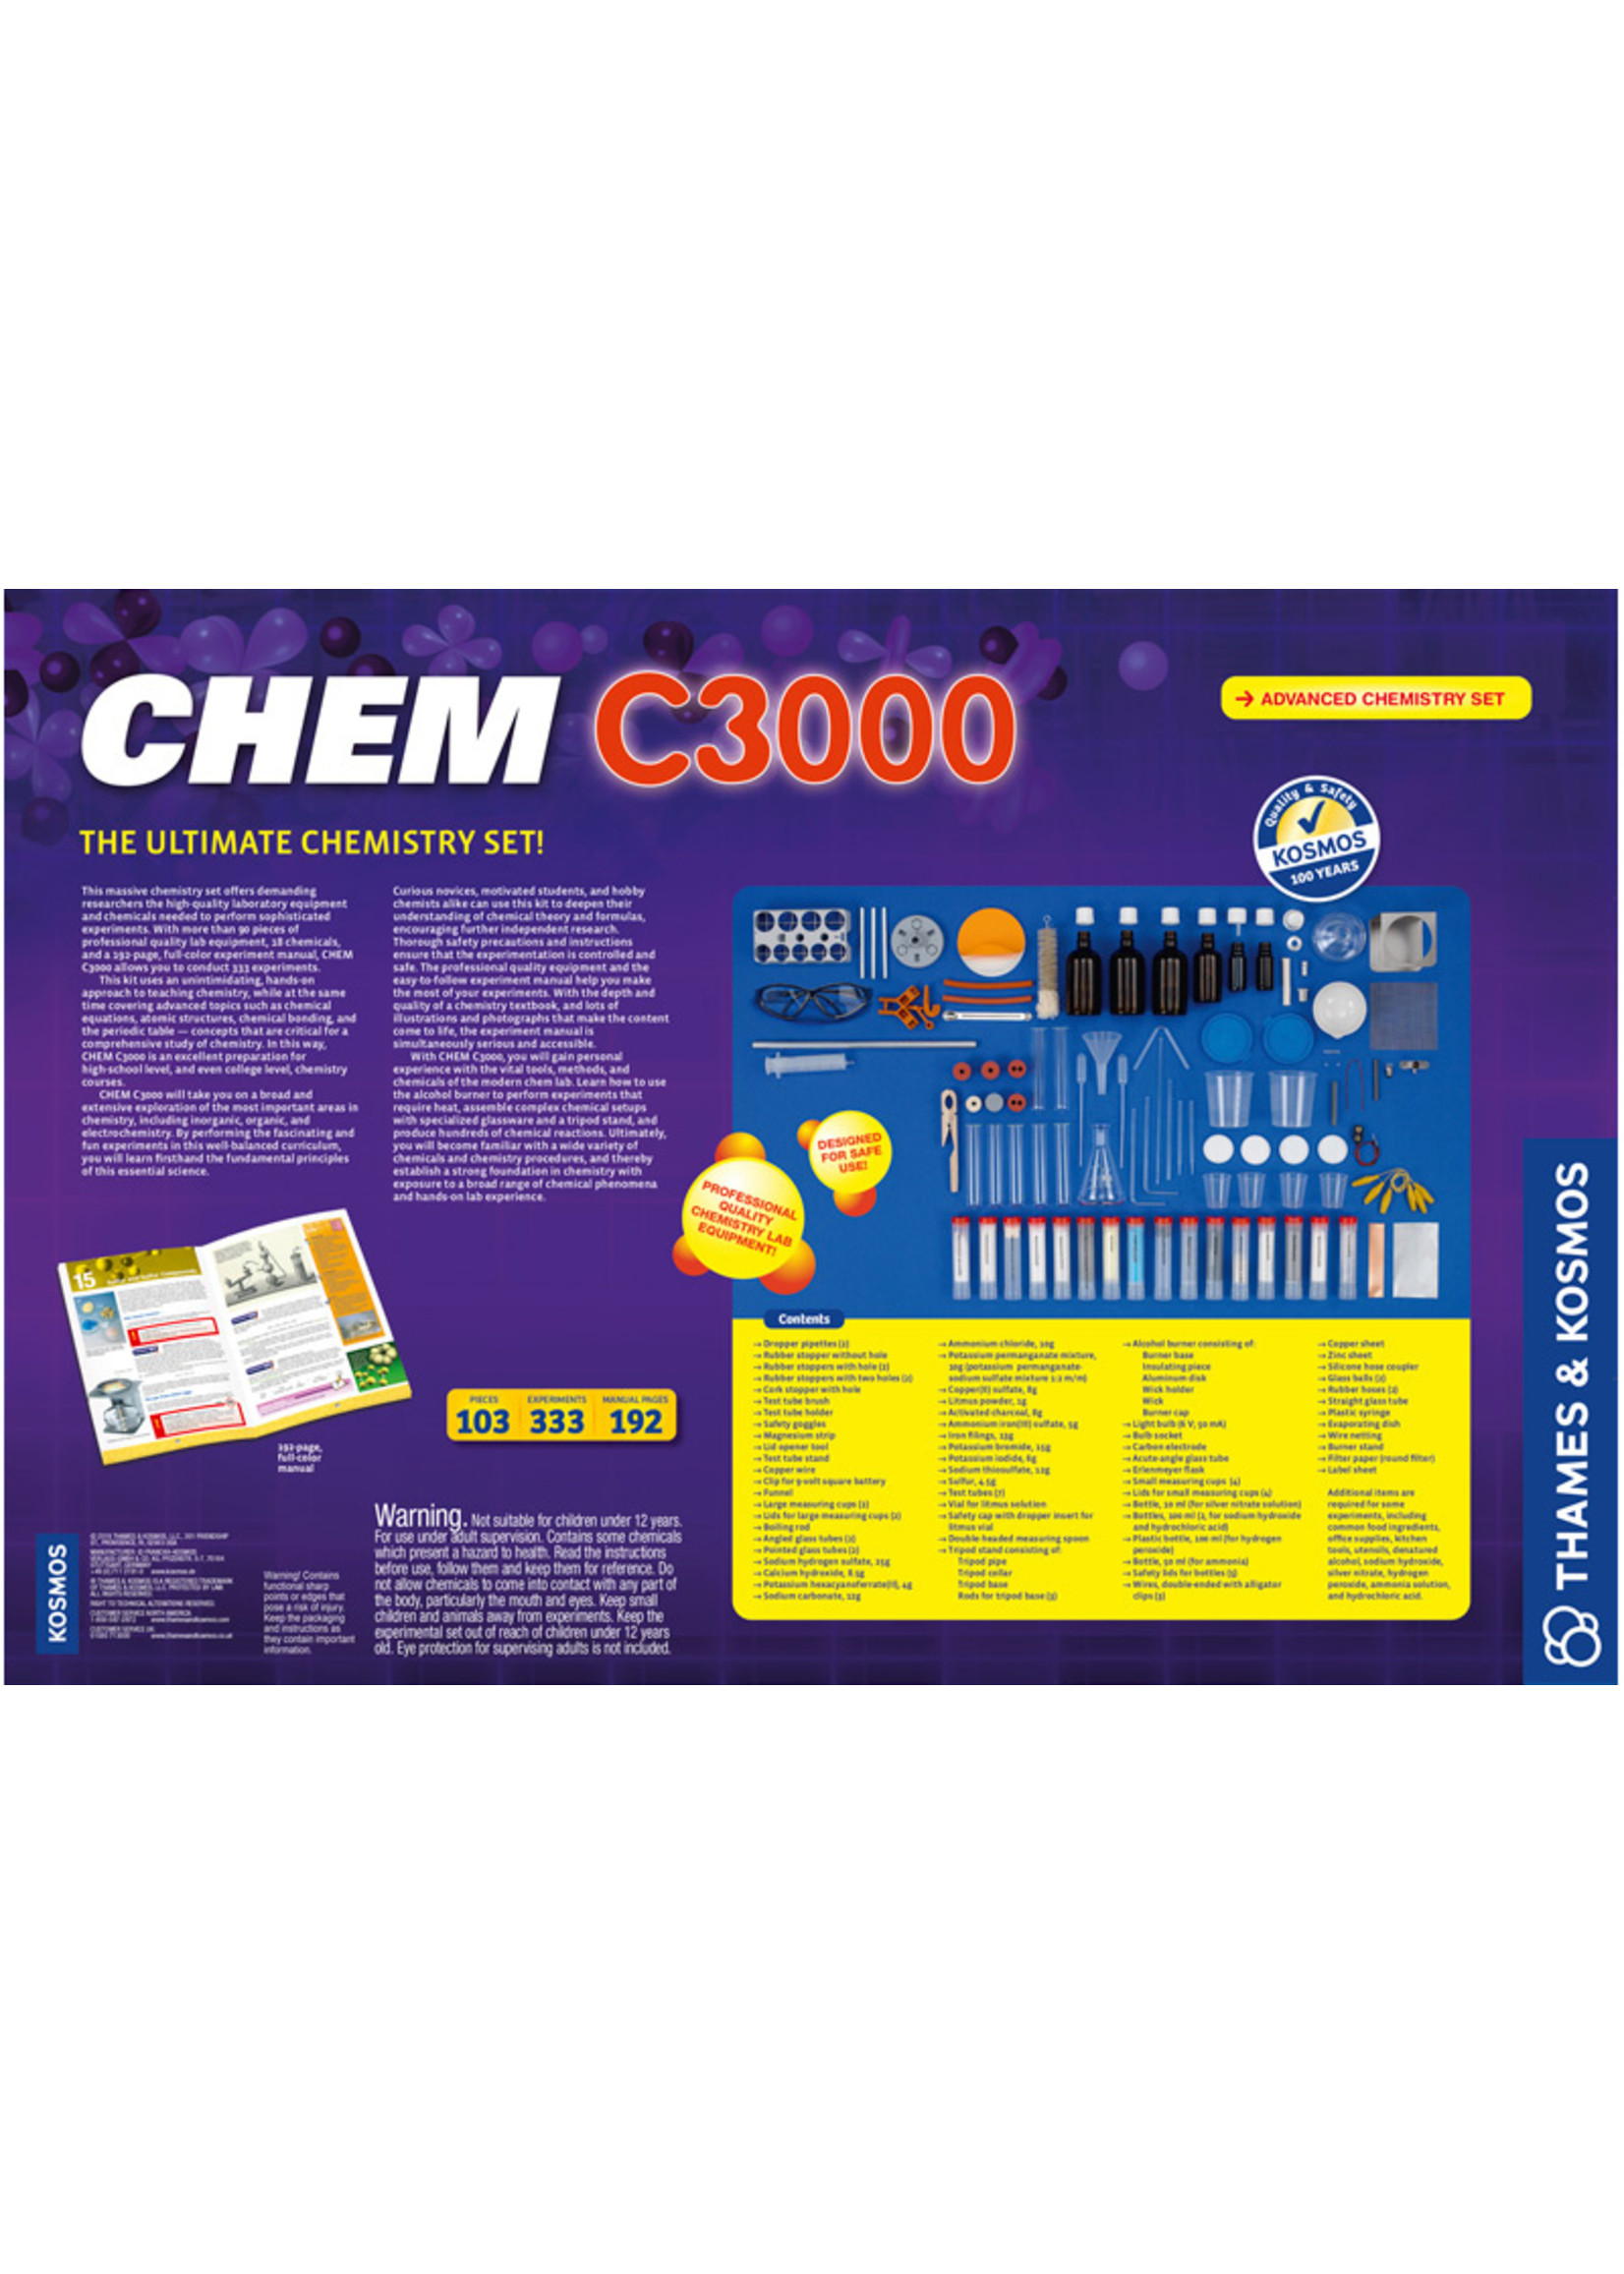 Thames & Kosmos Chem C3000